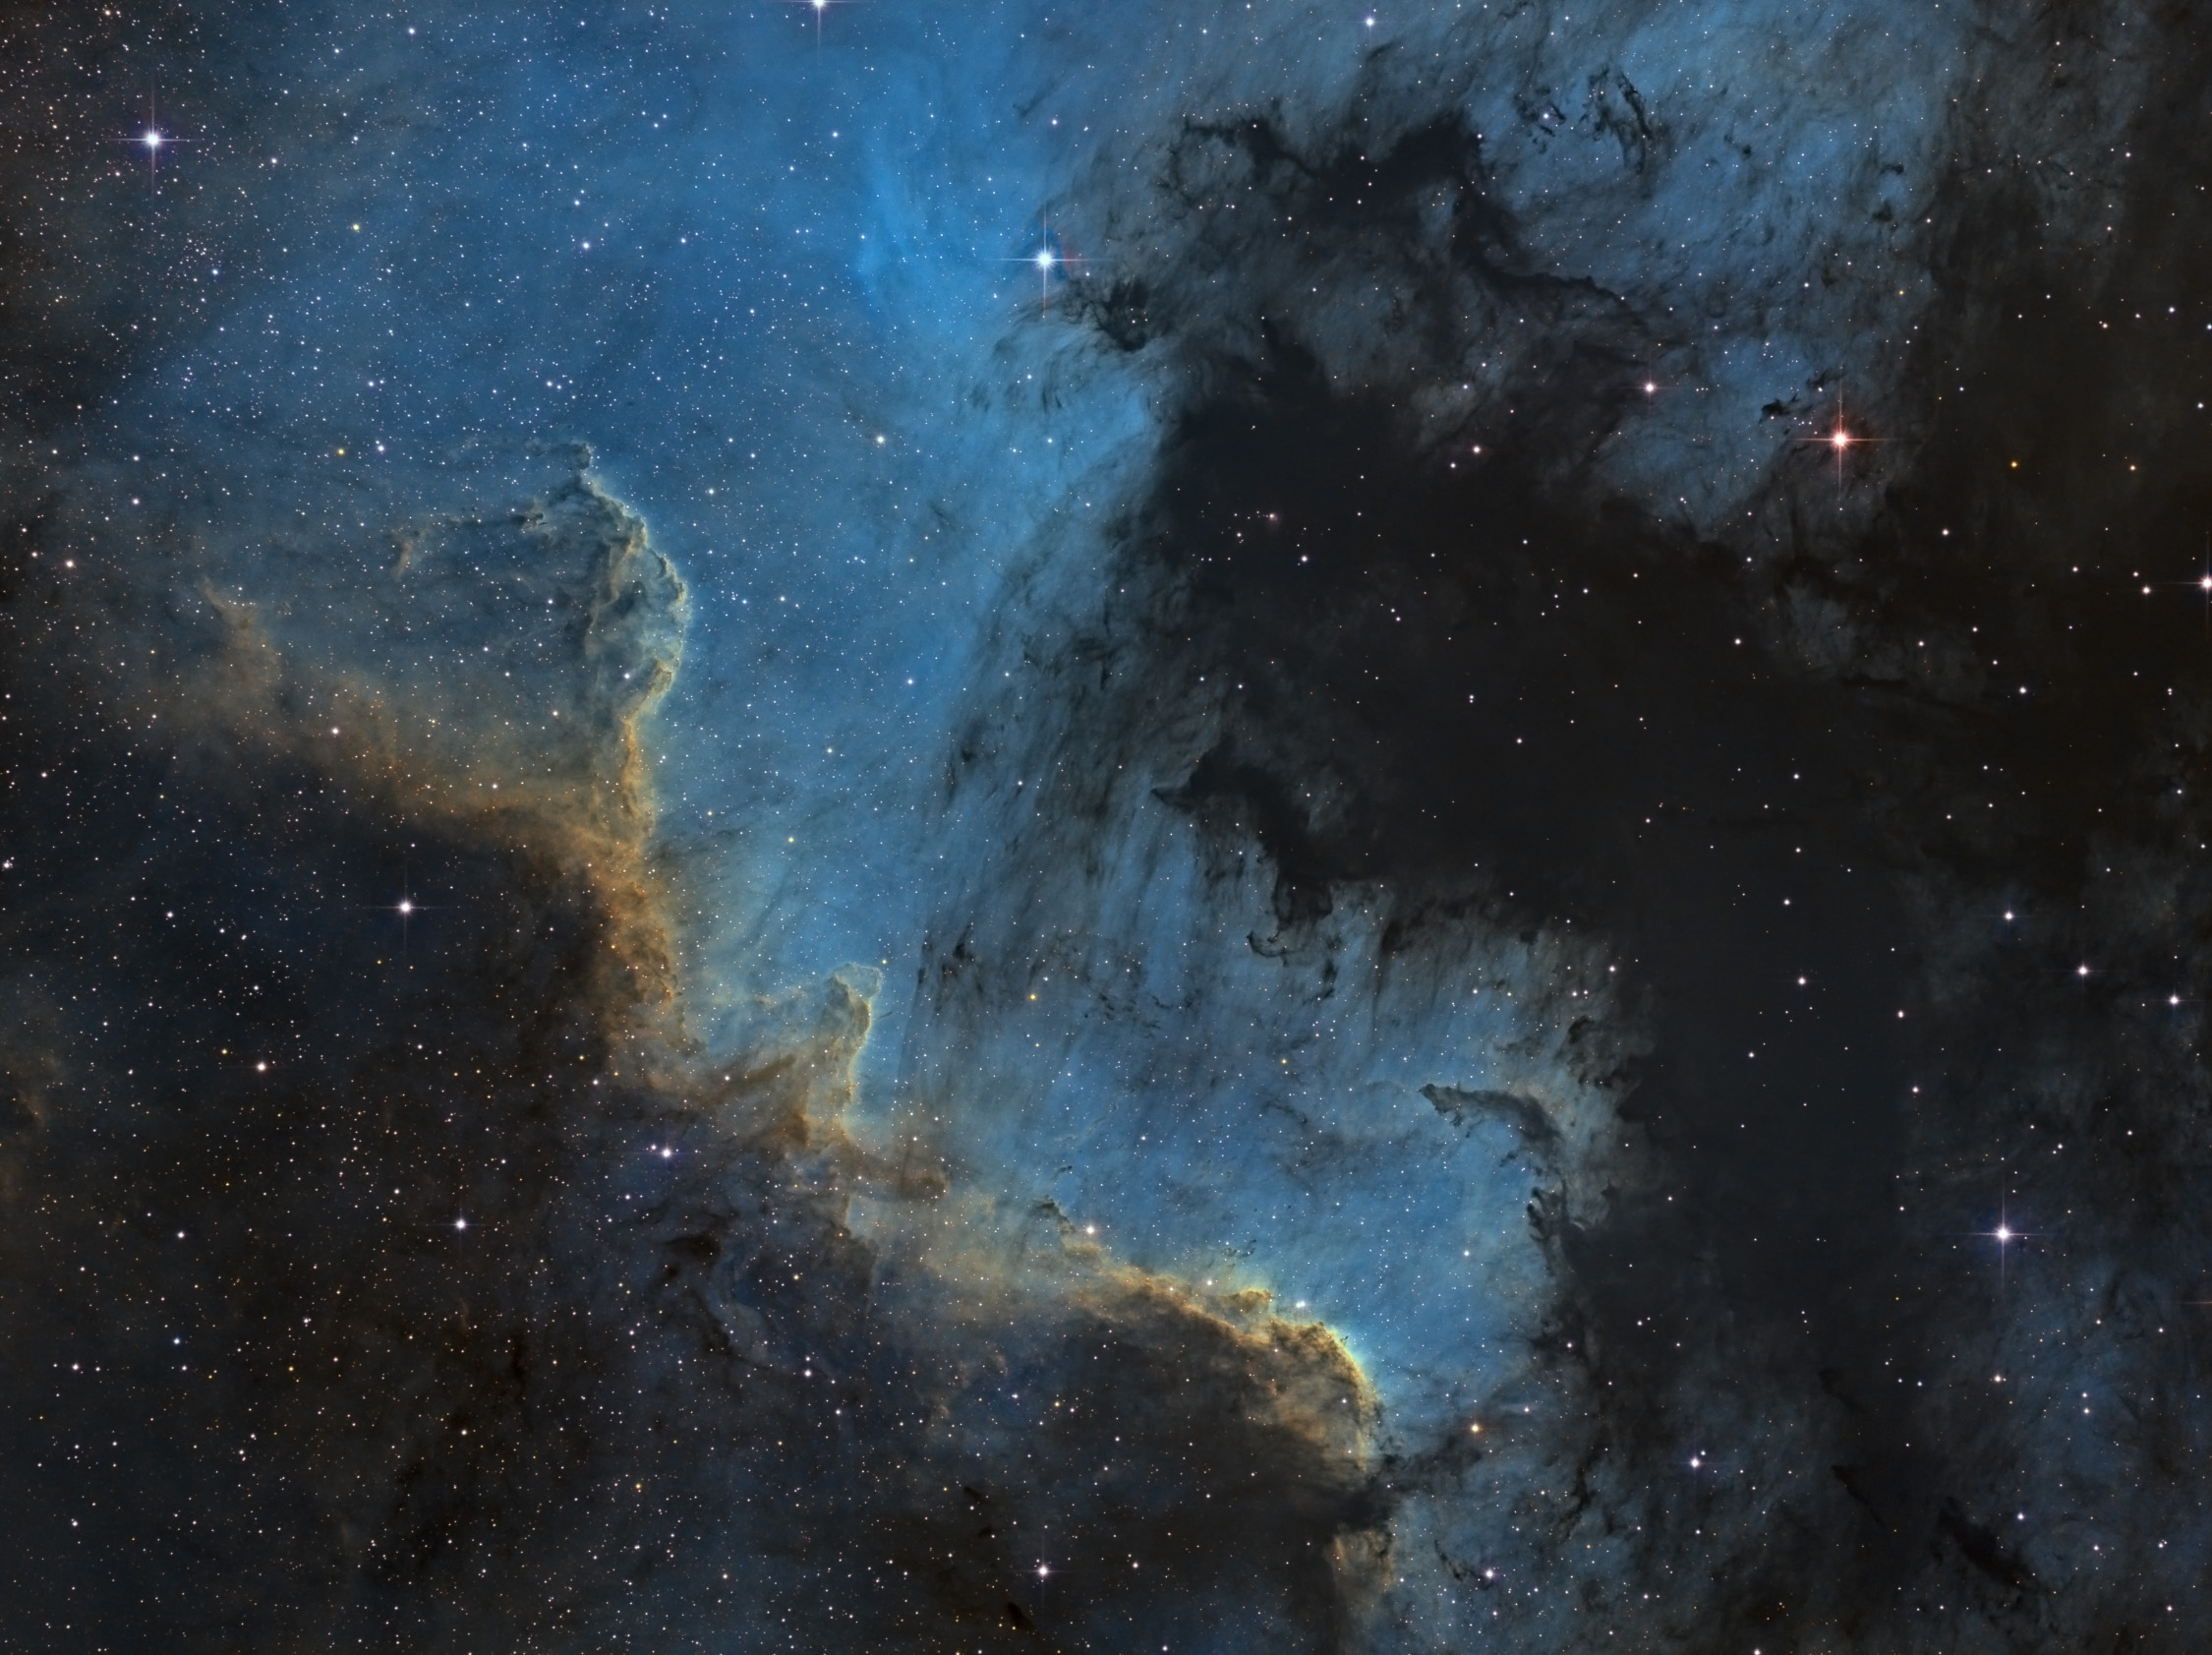 Cygnus Wall_SHO.jpg